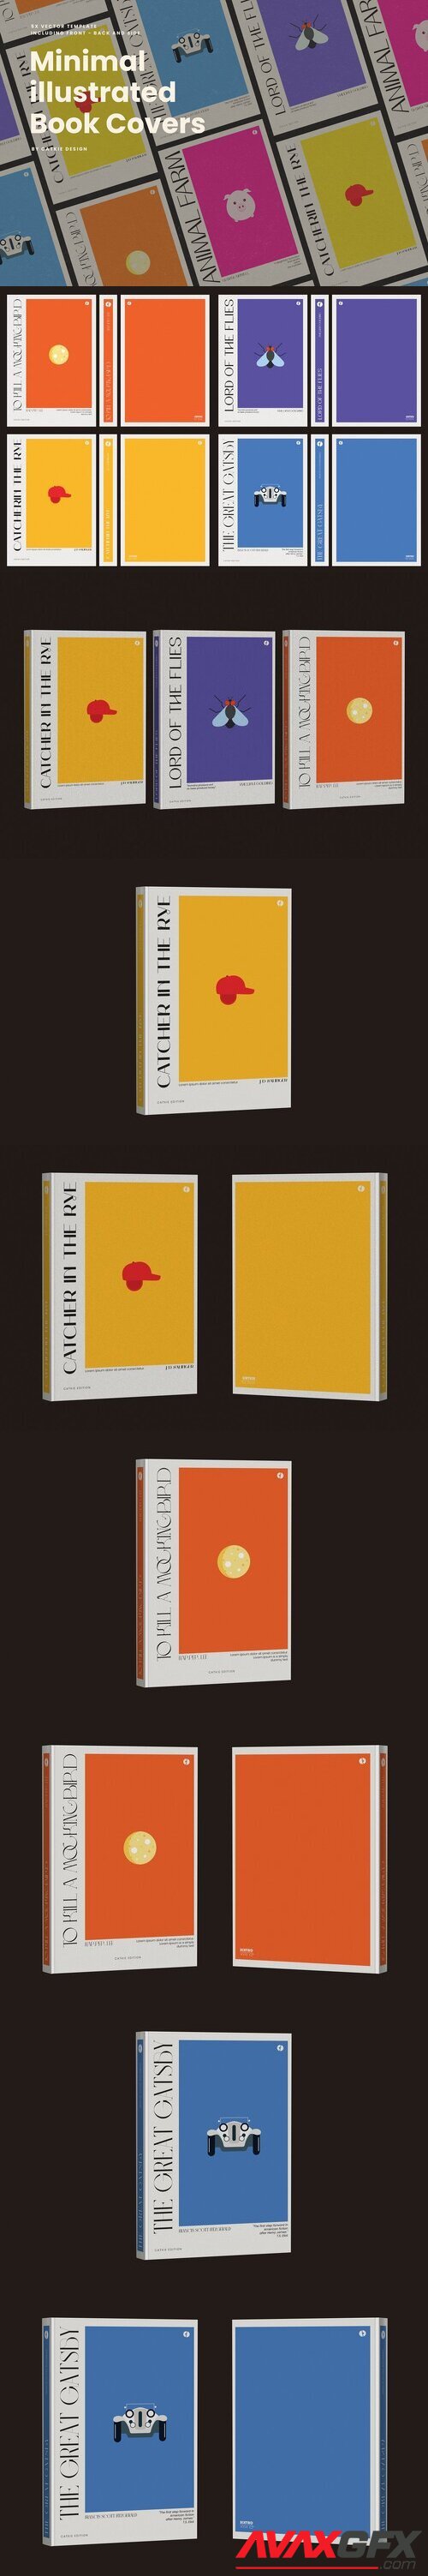 CreativeMarket - Illustrated Minimal Book Covers 7310820 AI, 